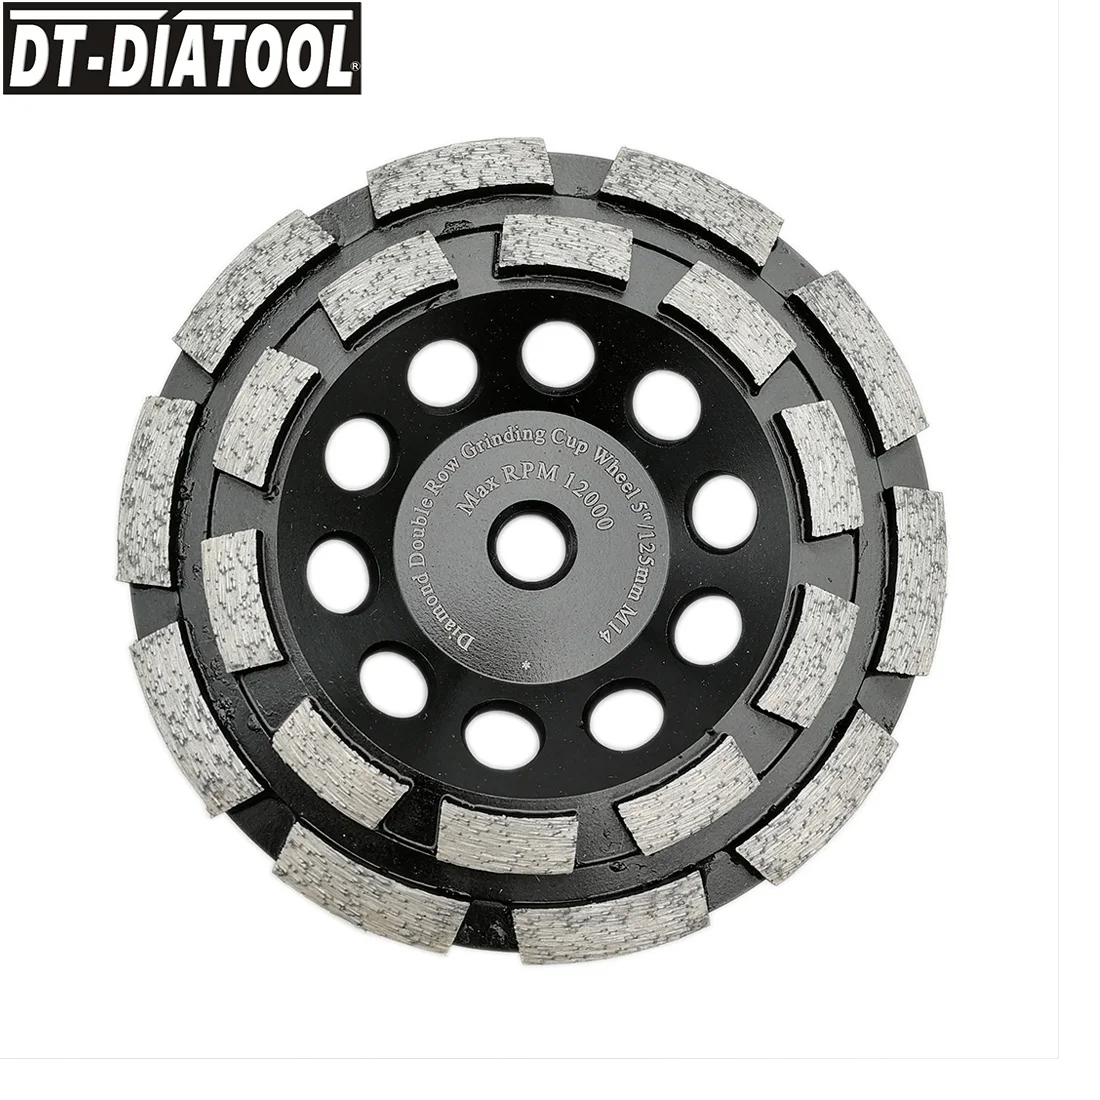 

DT-DIATOOL 1pc Dia 125mm/5inch M14 Thread Premium Diamond Double Row Cup Grinding Wheel For Concrete Hard Stone Granite Marble